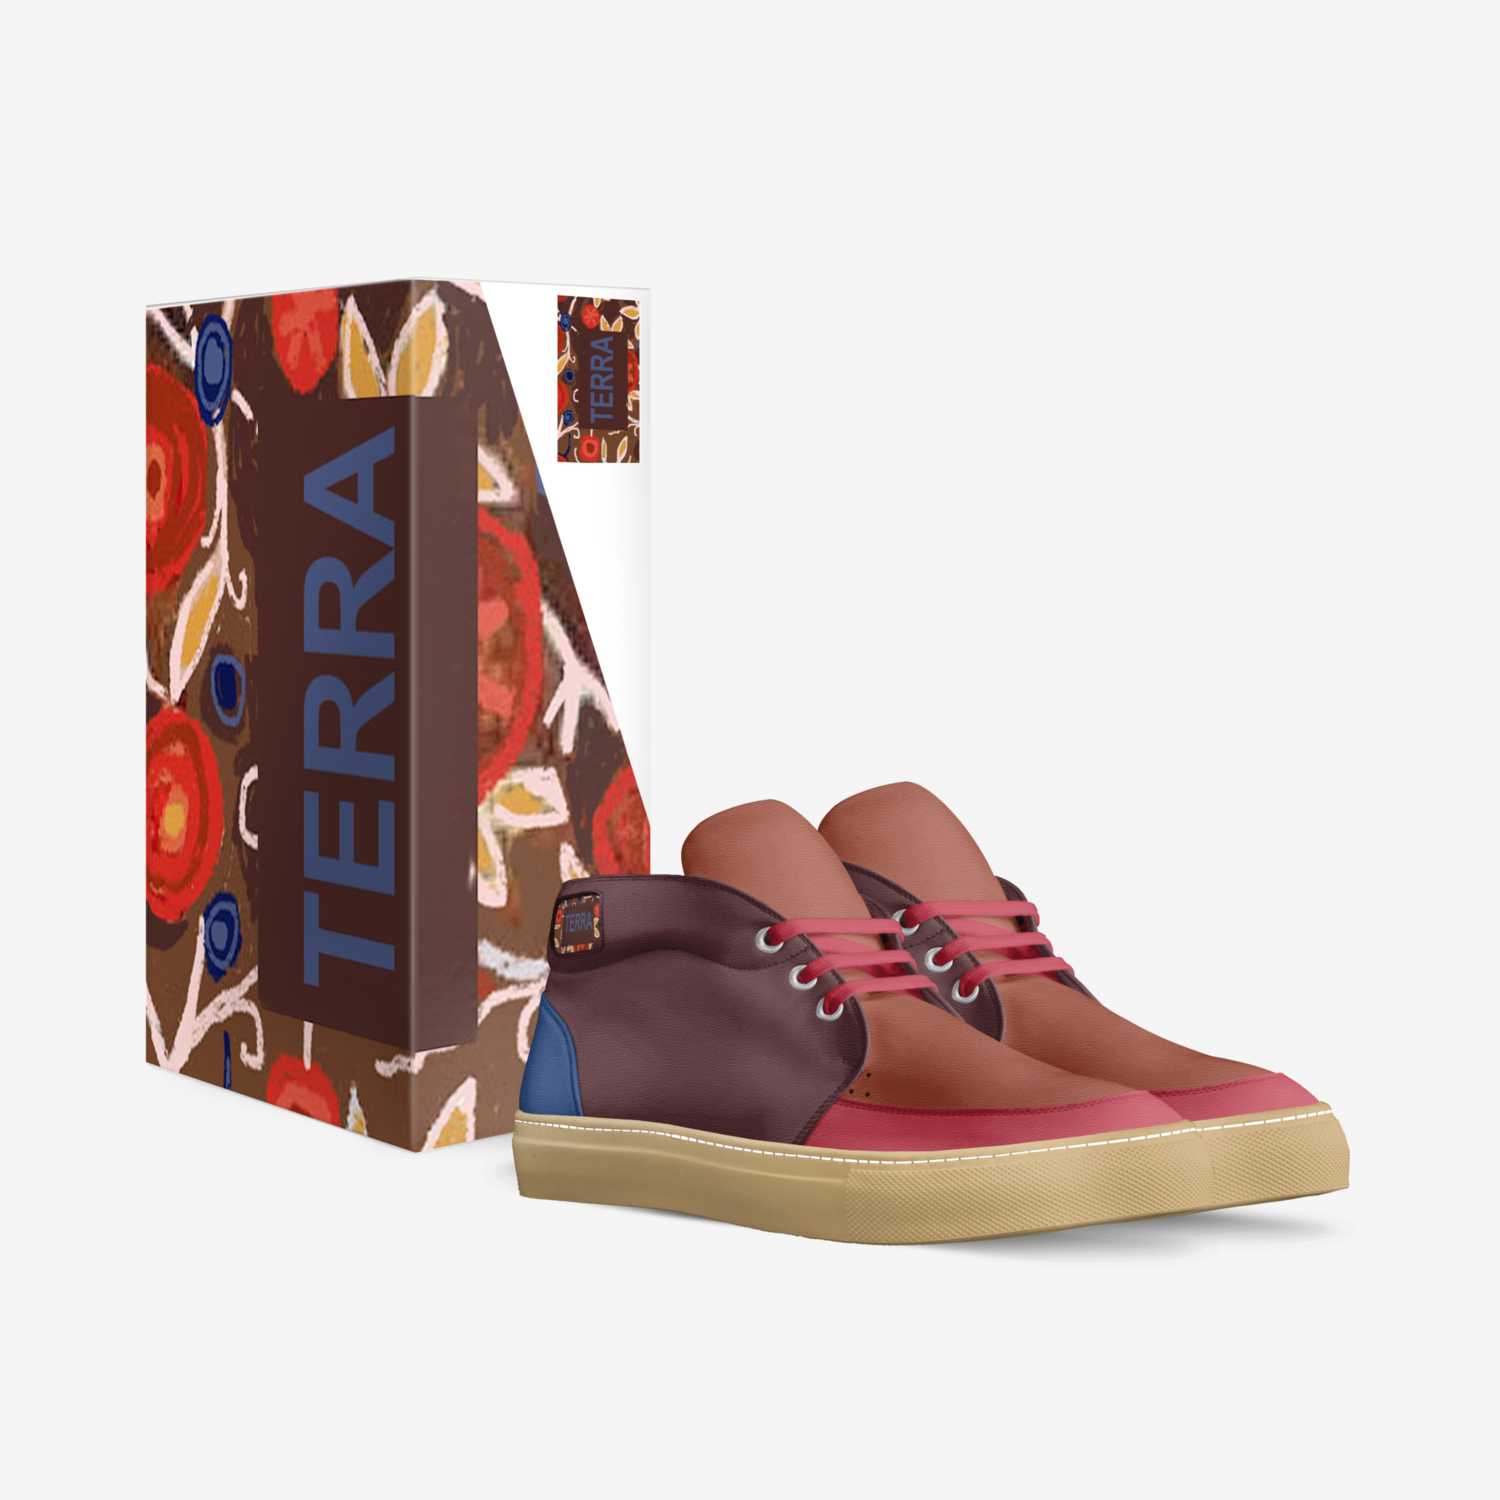 TERRA  custom made in Italy shoes by Raghubir | Box view